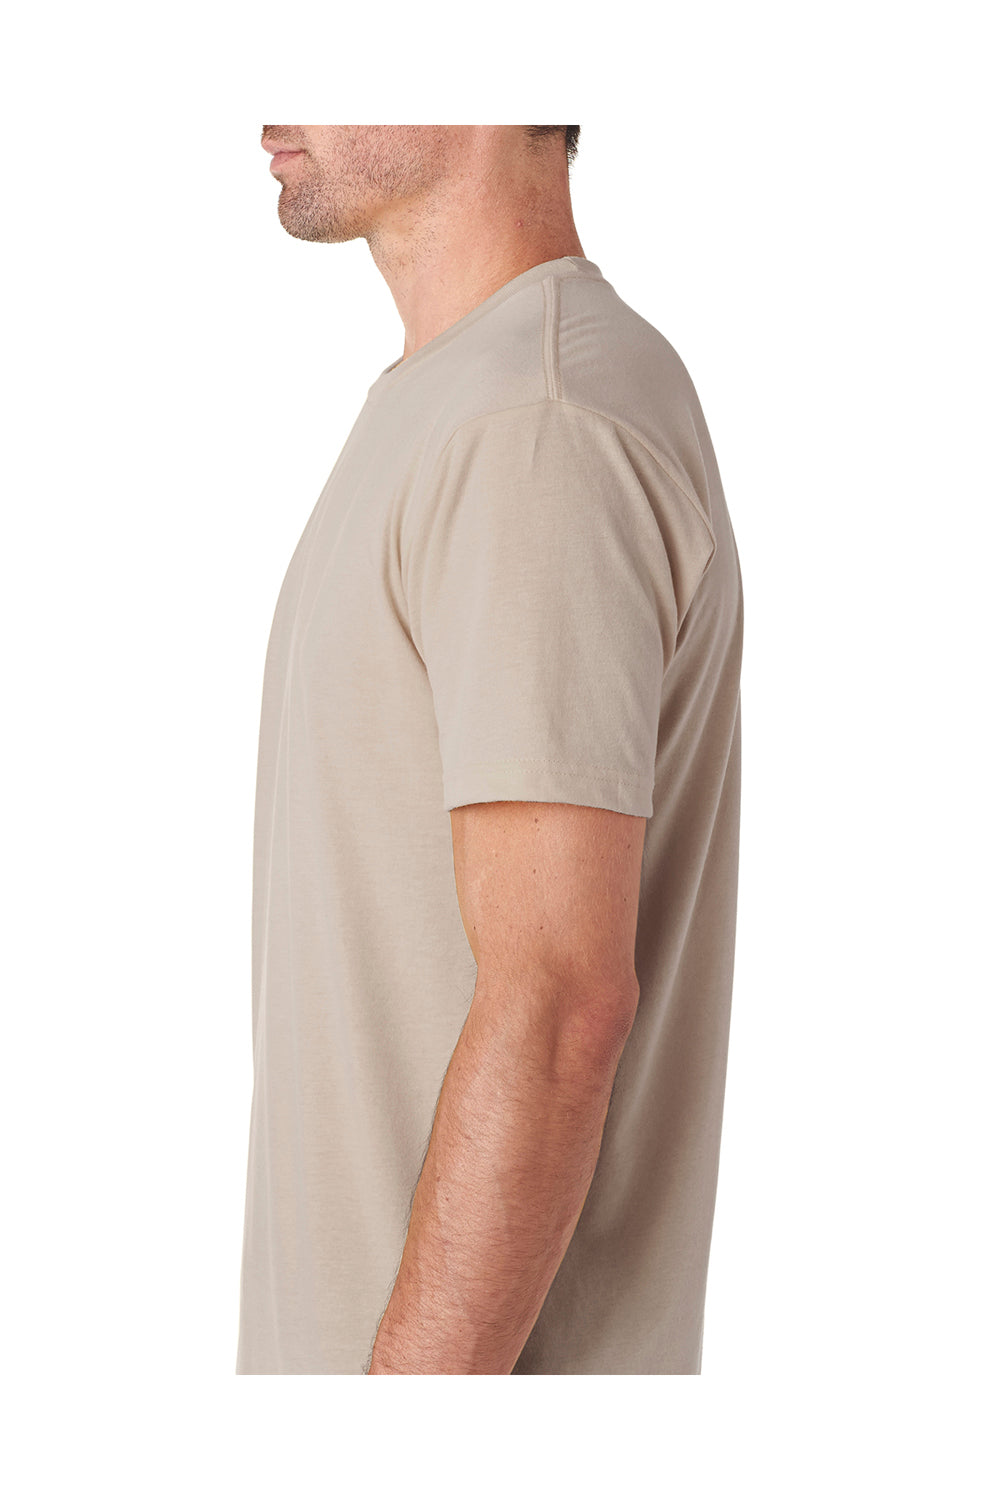 Next Level 6410 Mens Sueded Jersey Short Sleeve Crewneck T-Shirt Sand Brown Side